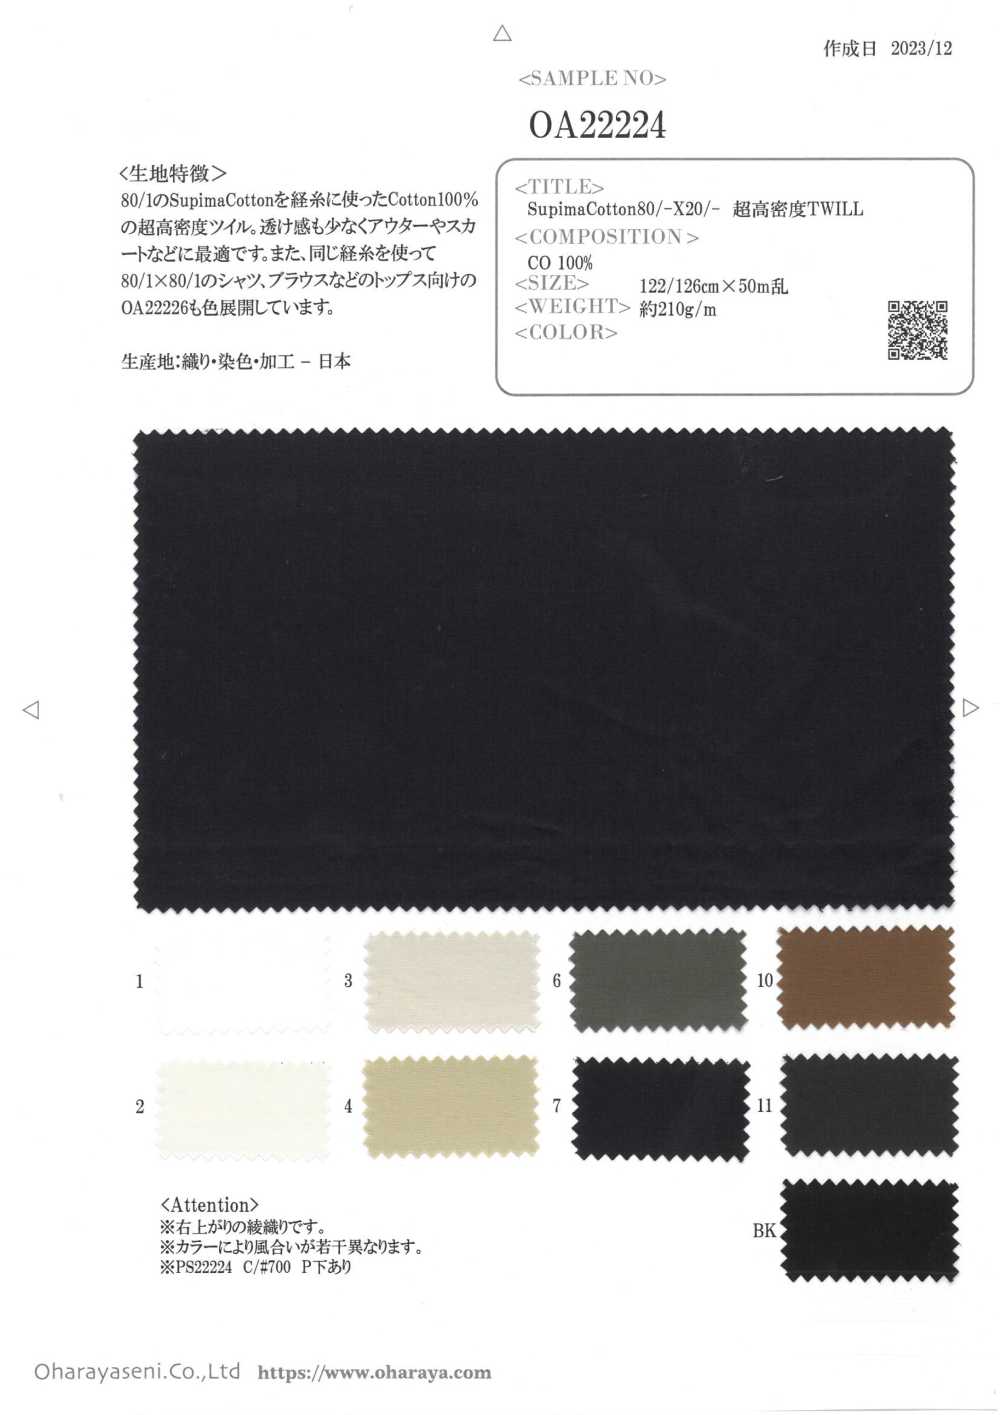 OA22224 SupimaCotton80/-X20/-Ultra High Density TWILL[Textilgewebe] Oharayaseni